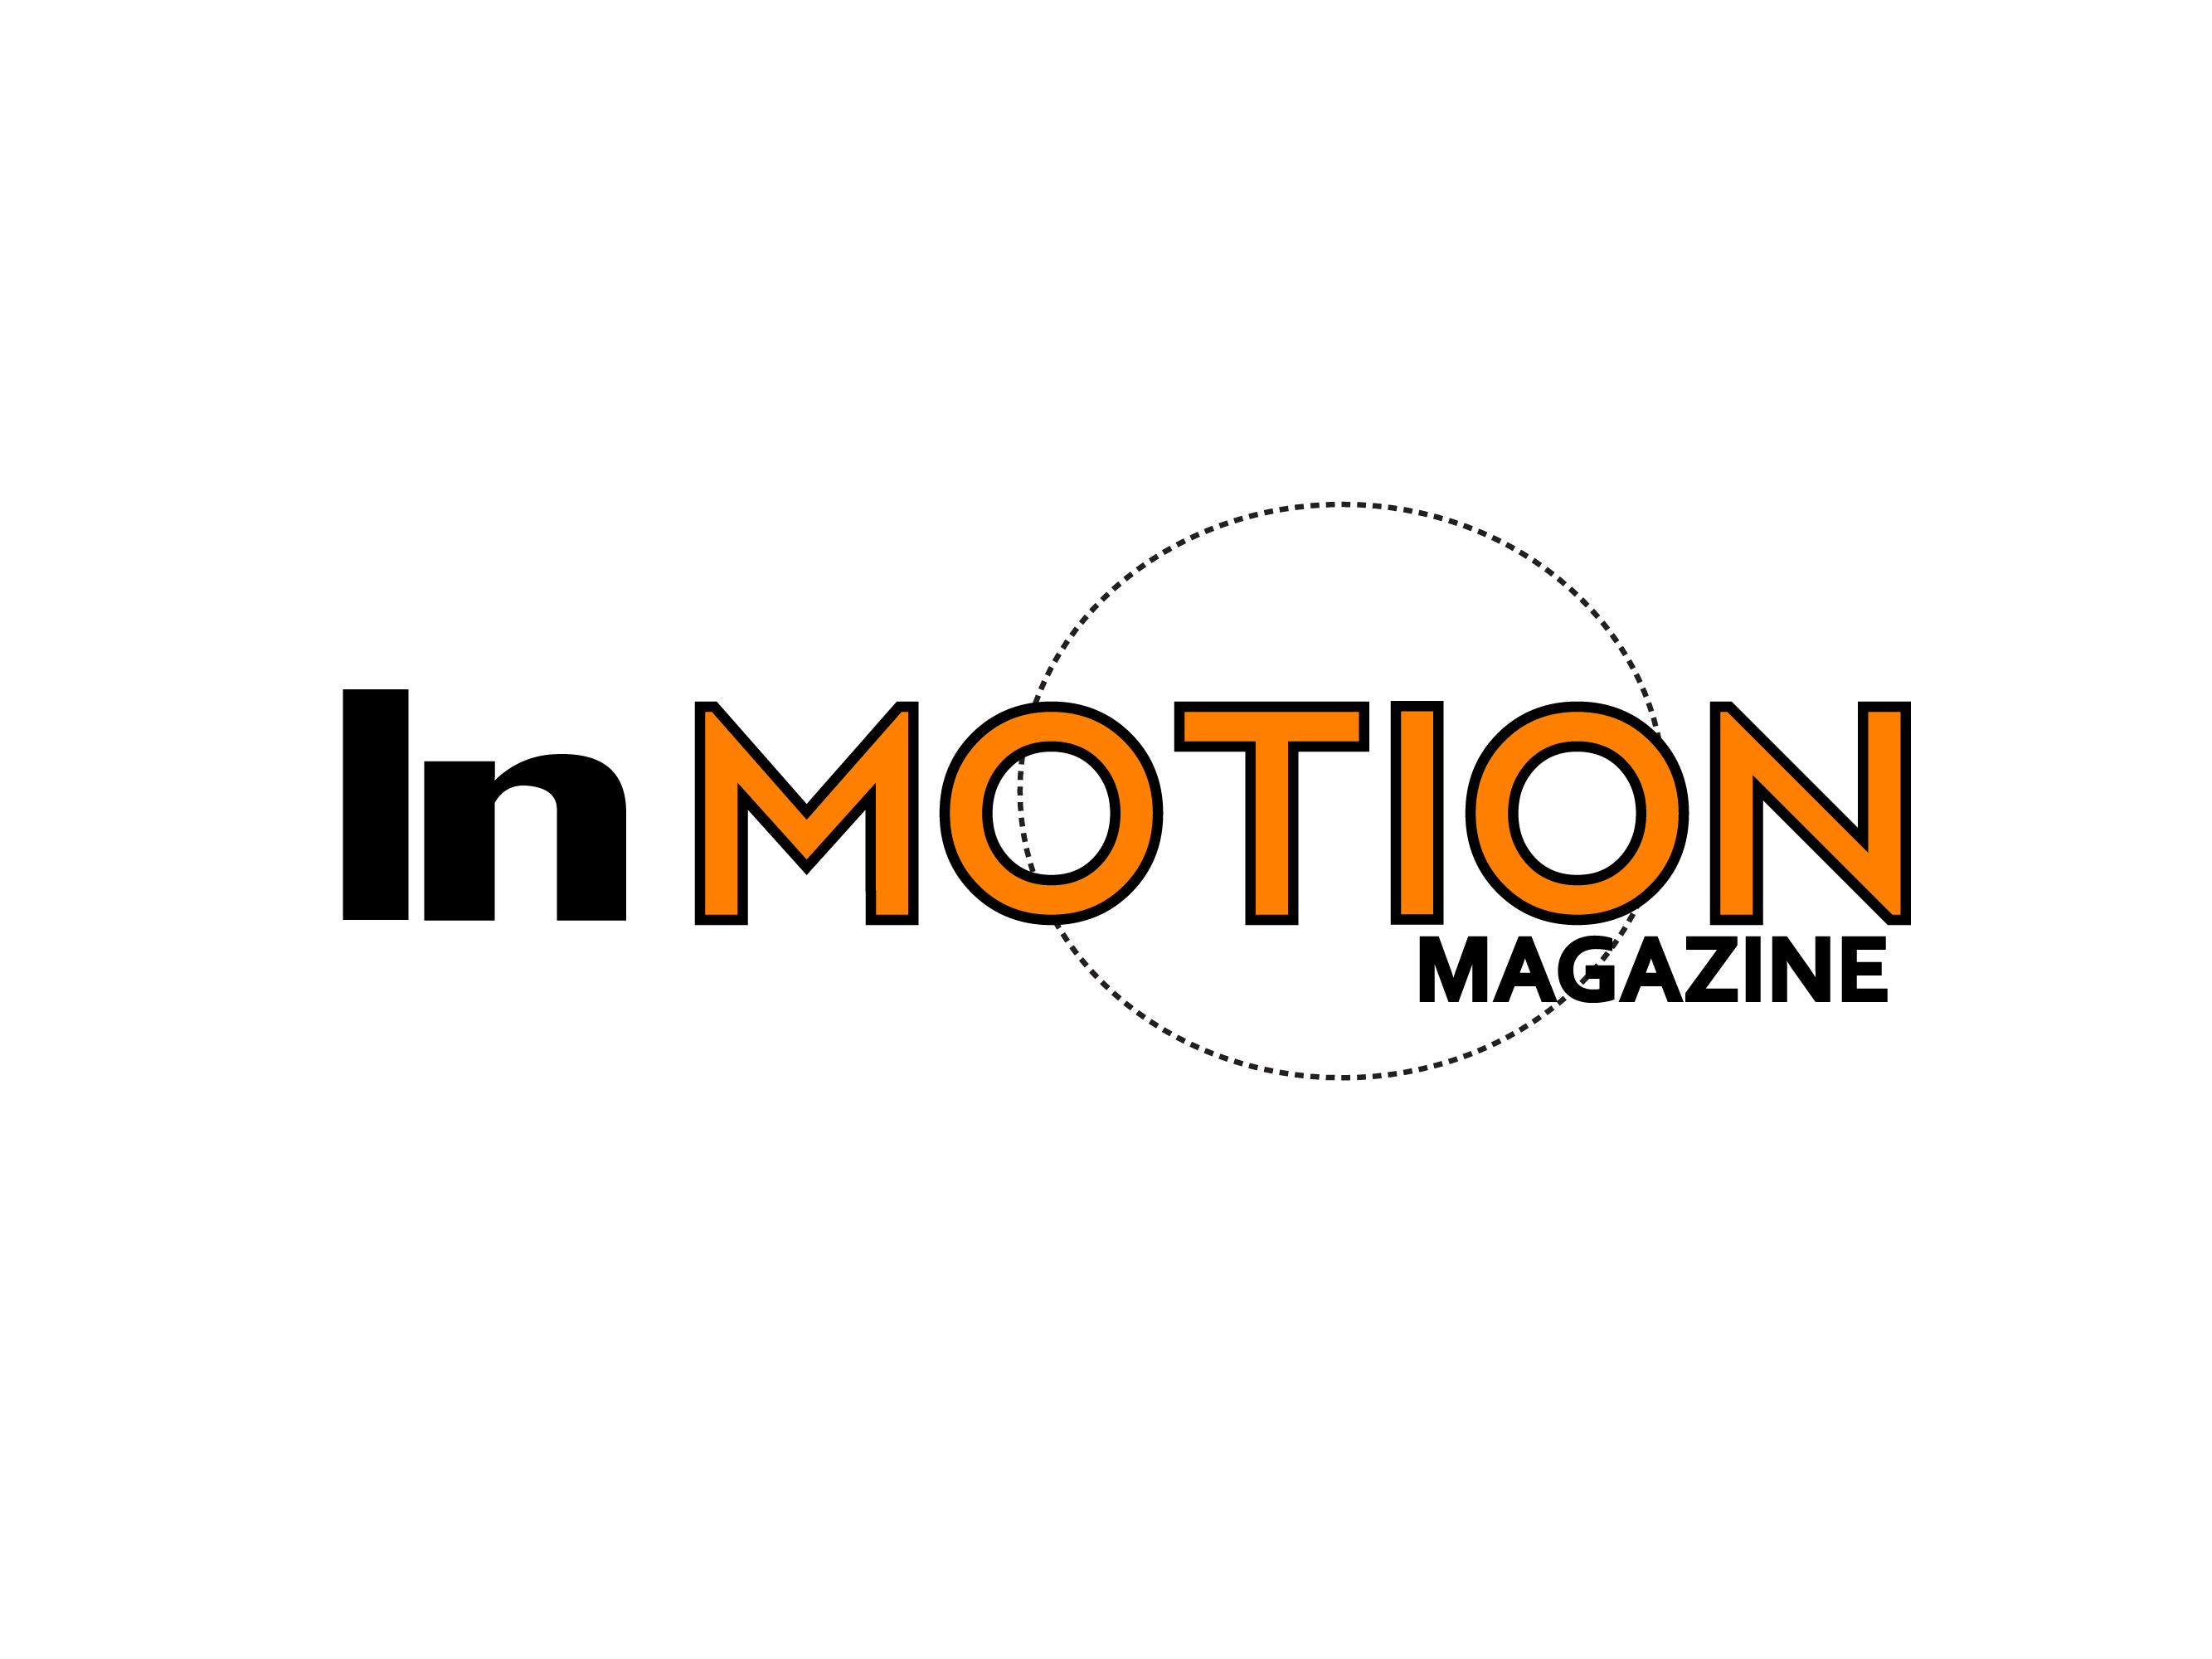 InMotion Magazine - Rebranding